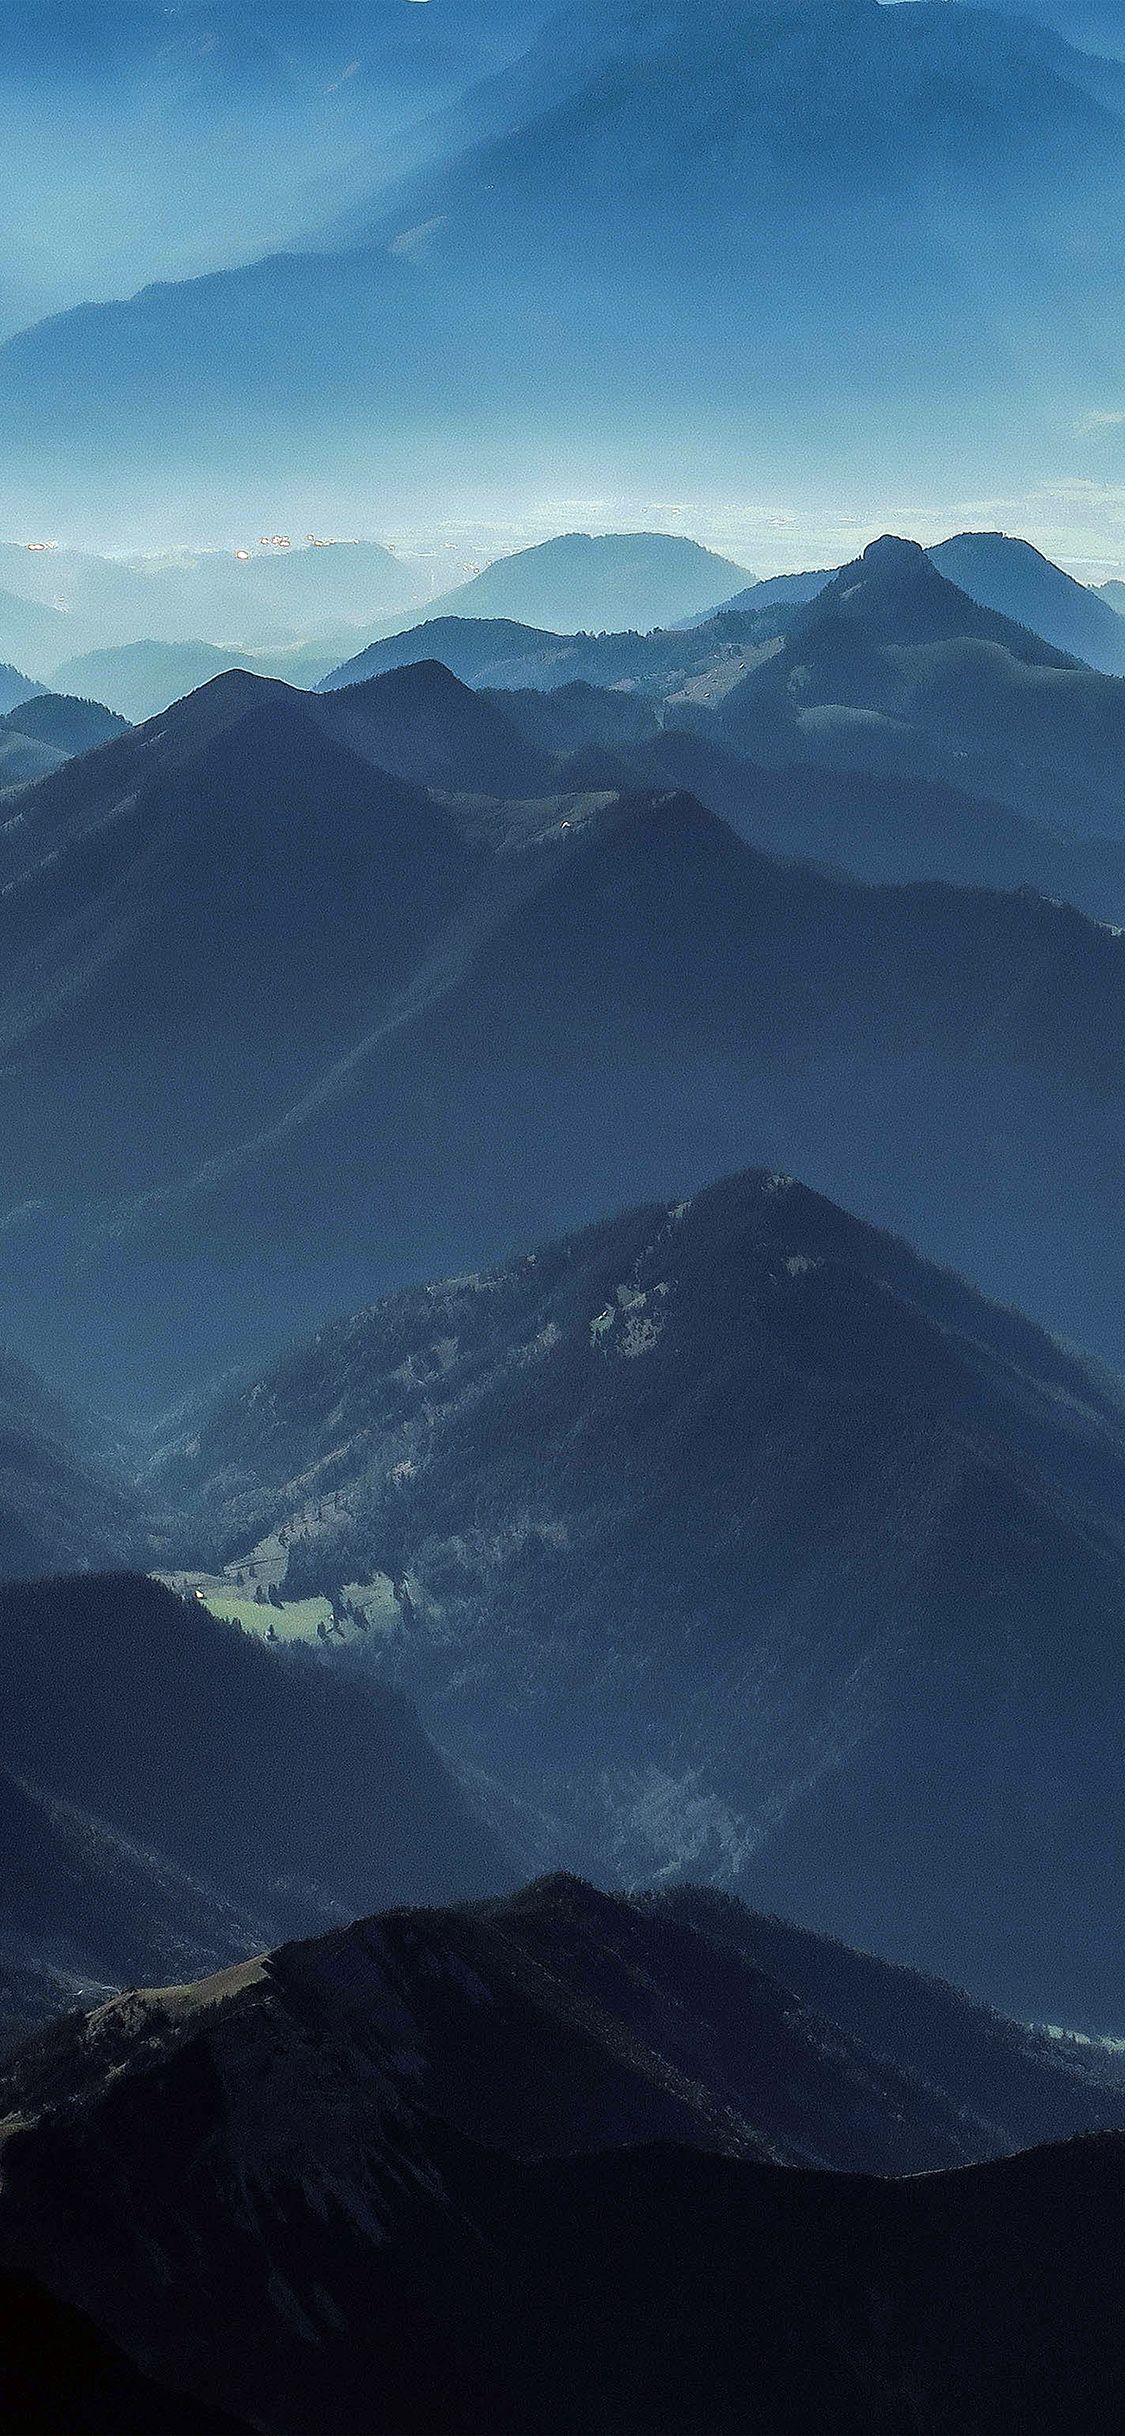 iPhone X wallpaper. mountain nature blue summer earth dark